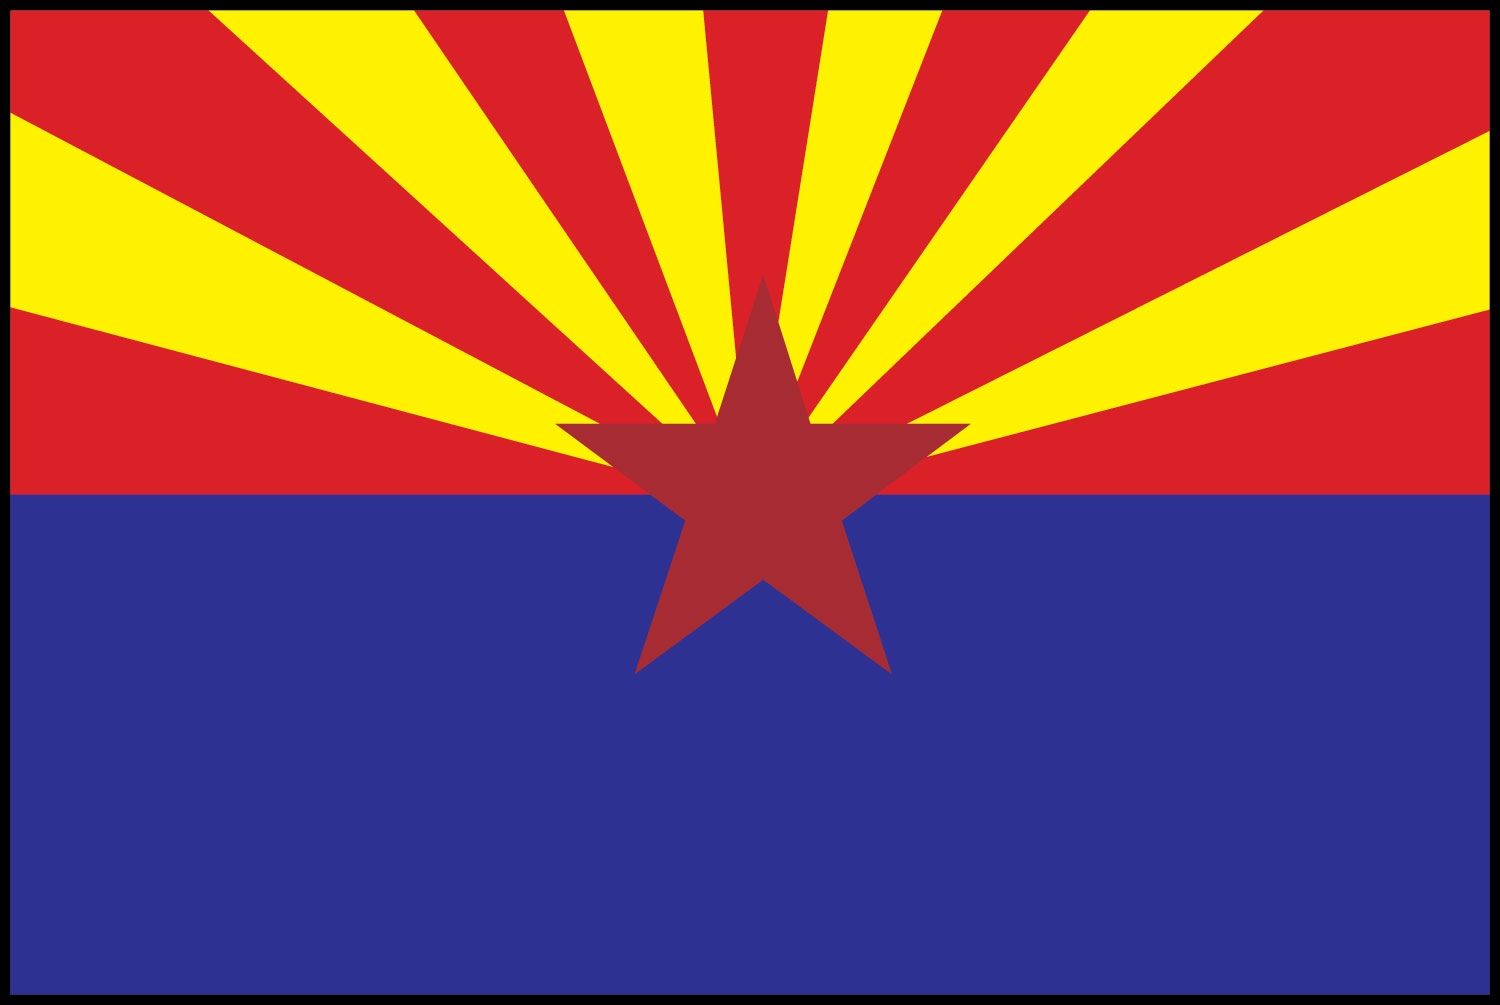 Arizona Prayer of the Day - Today's Prayer of the Day focuses on the State of Arizona in the United States of America. #Arizona #PrayeroftheDay